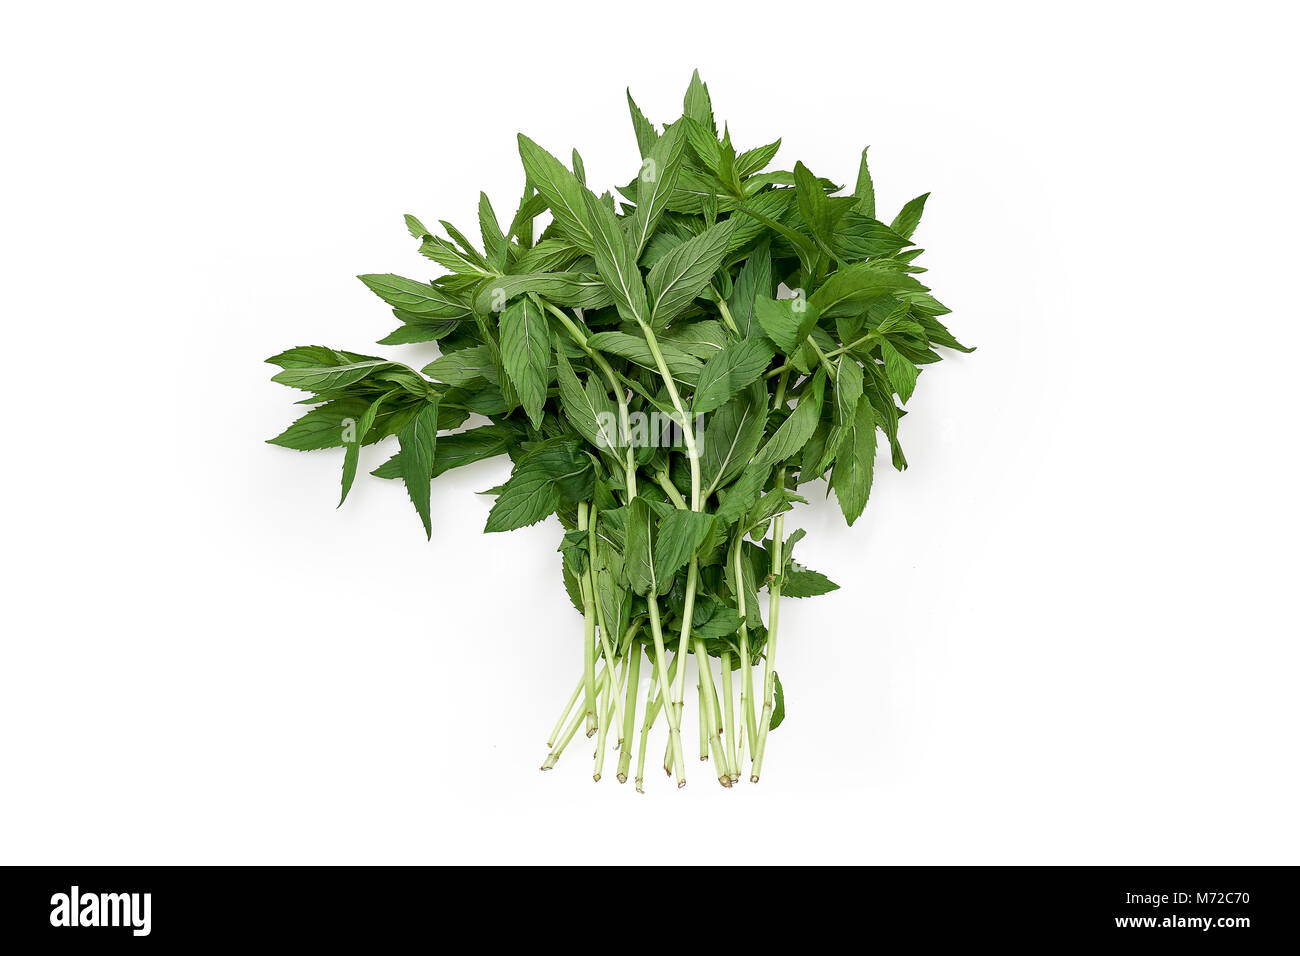 Vietnamese mint herb on white background Stock Photo